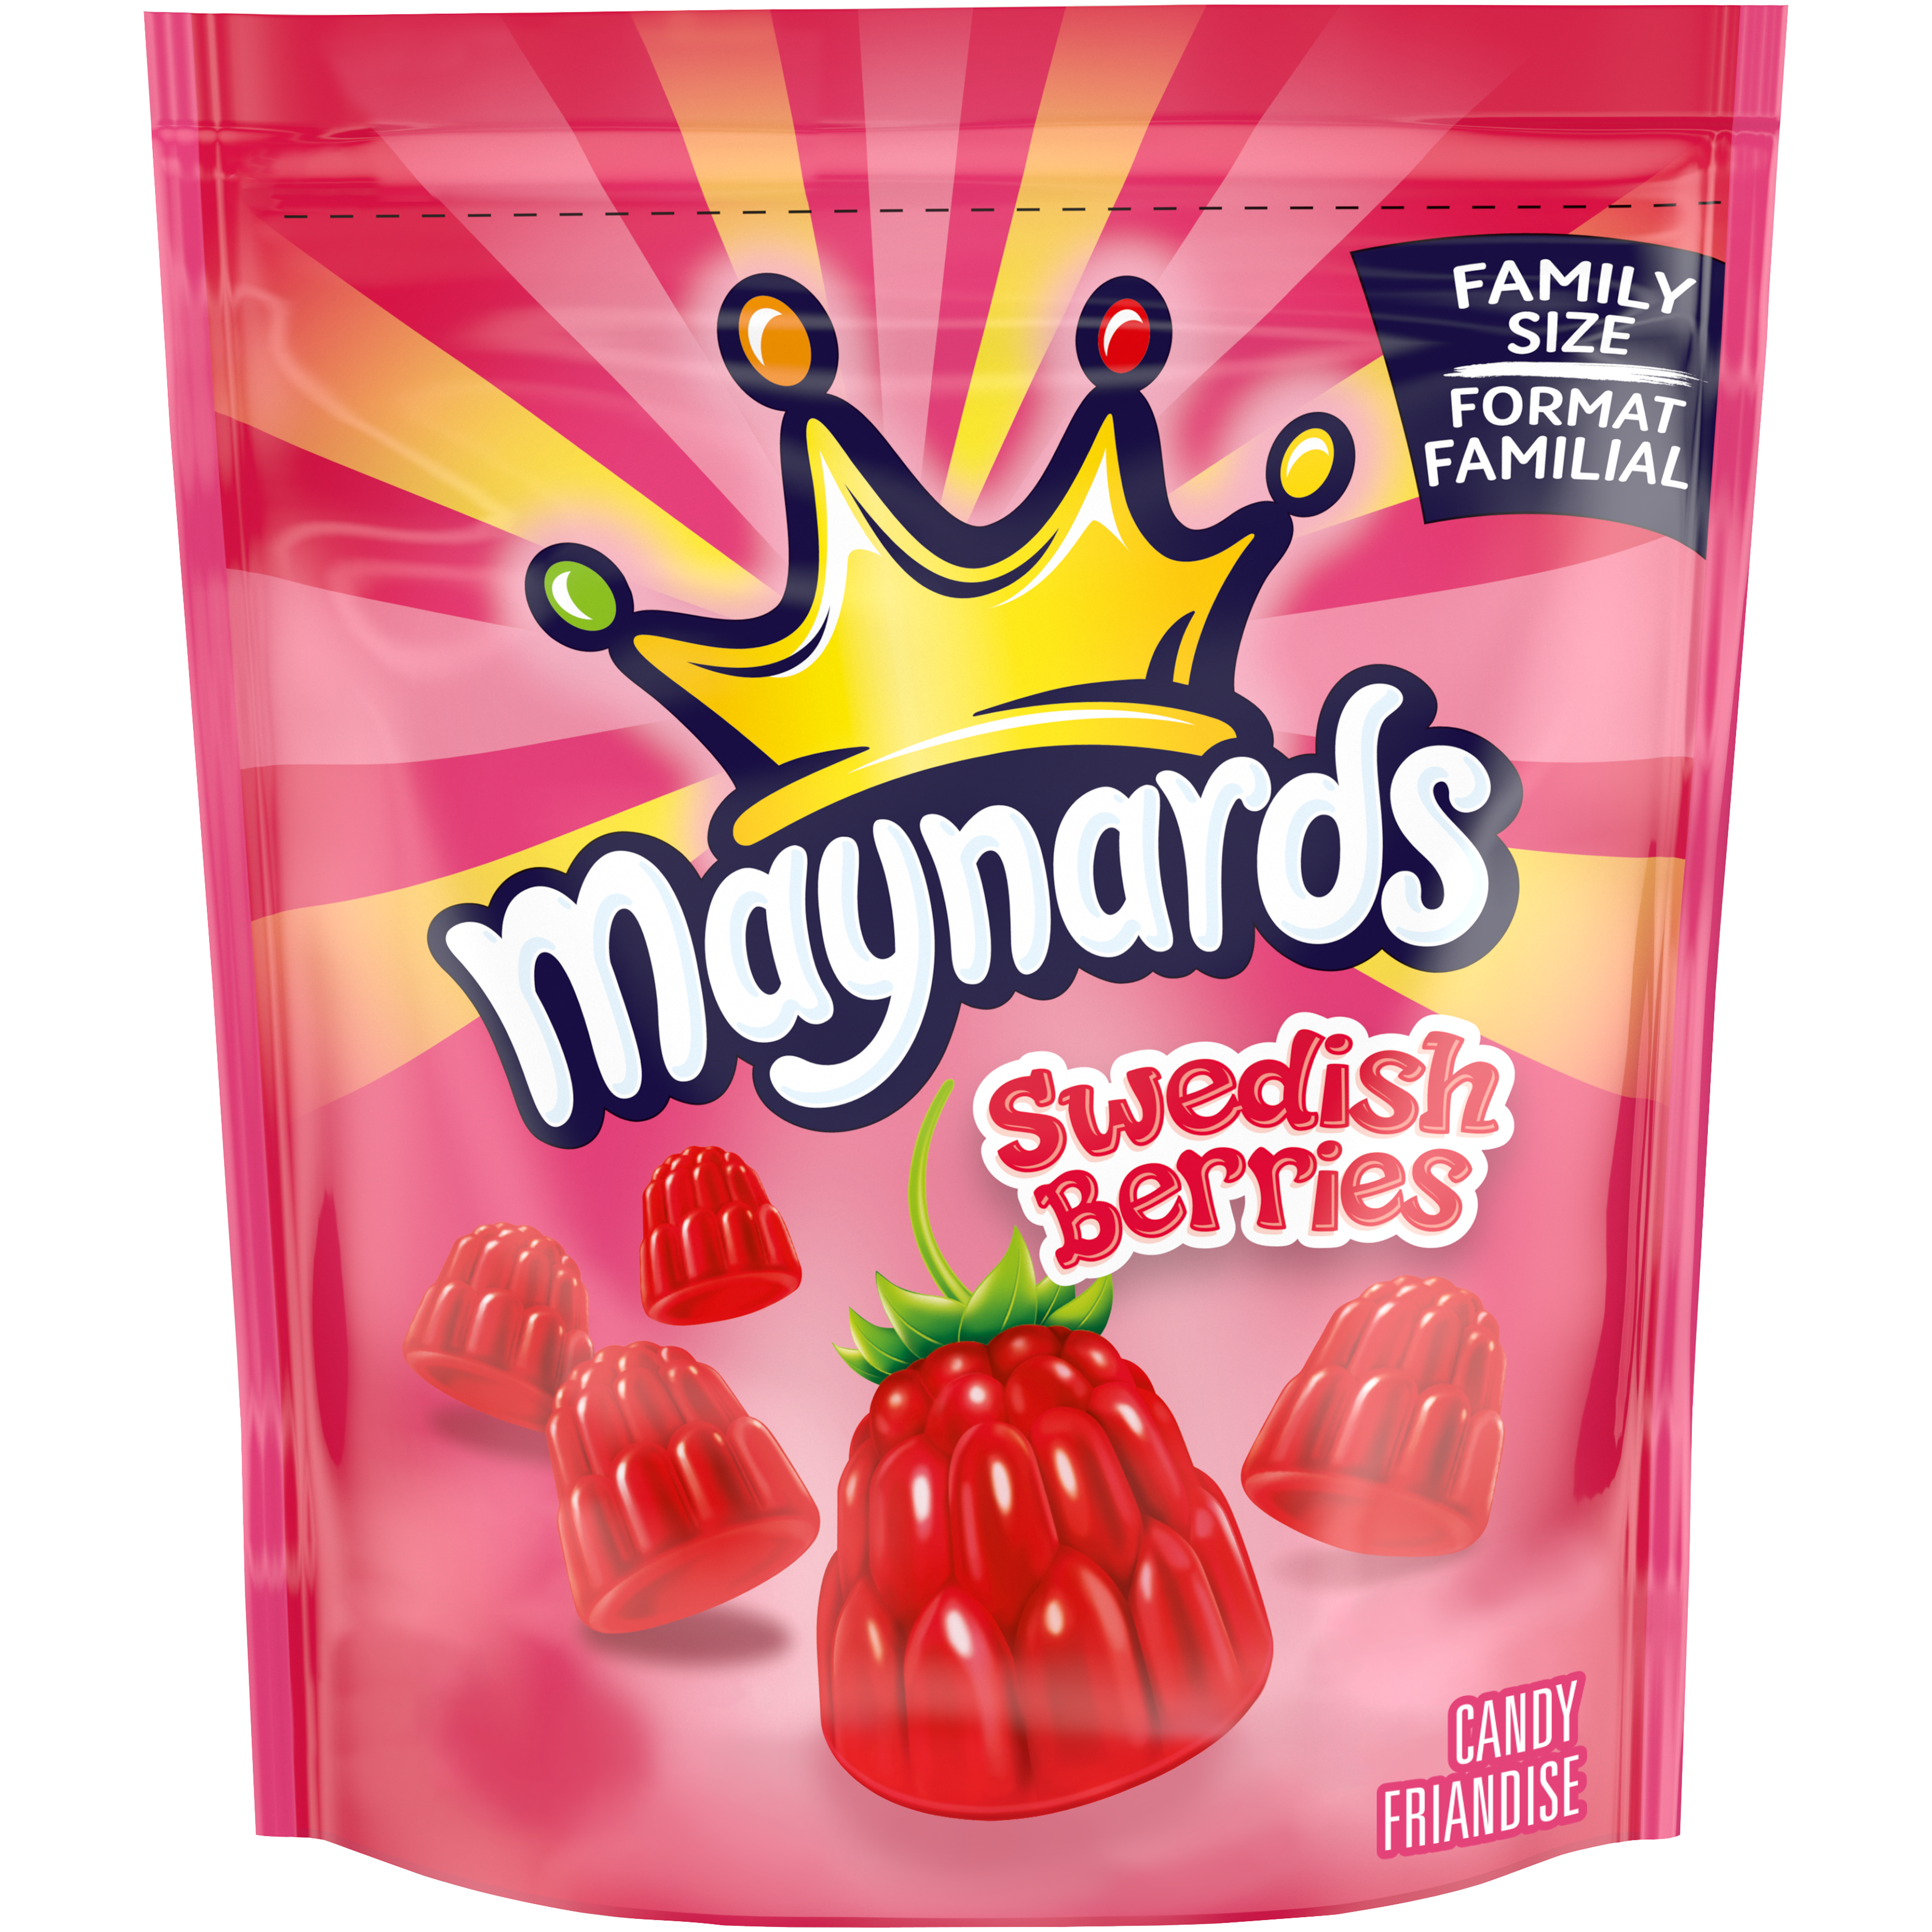 Maynards Swedish Berries Gummy Candy, 816g-1